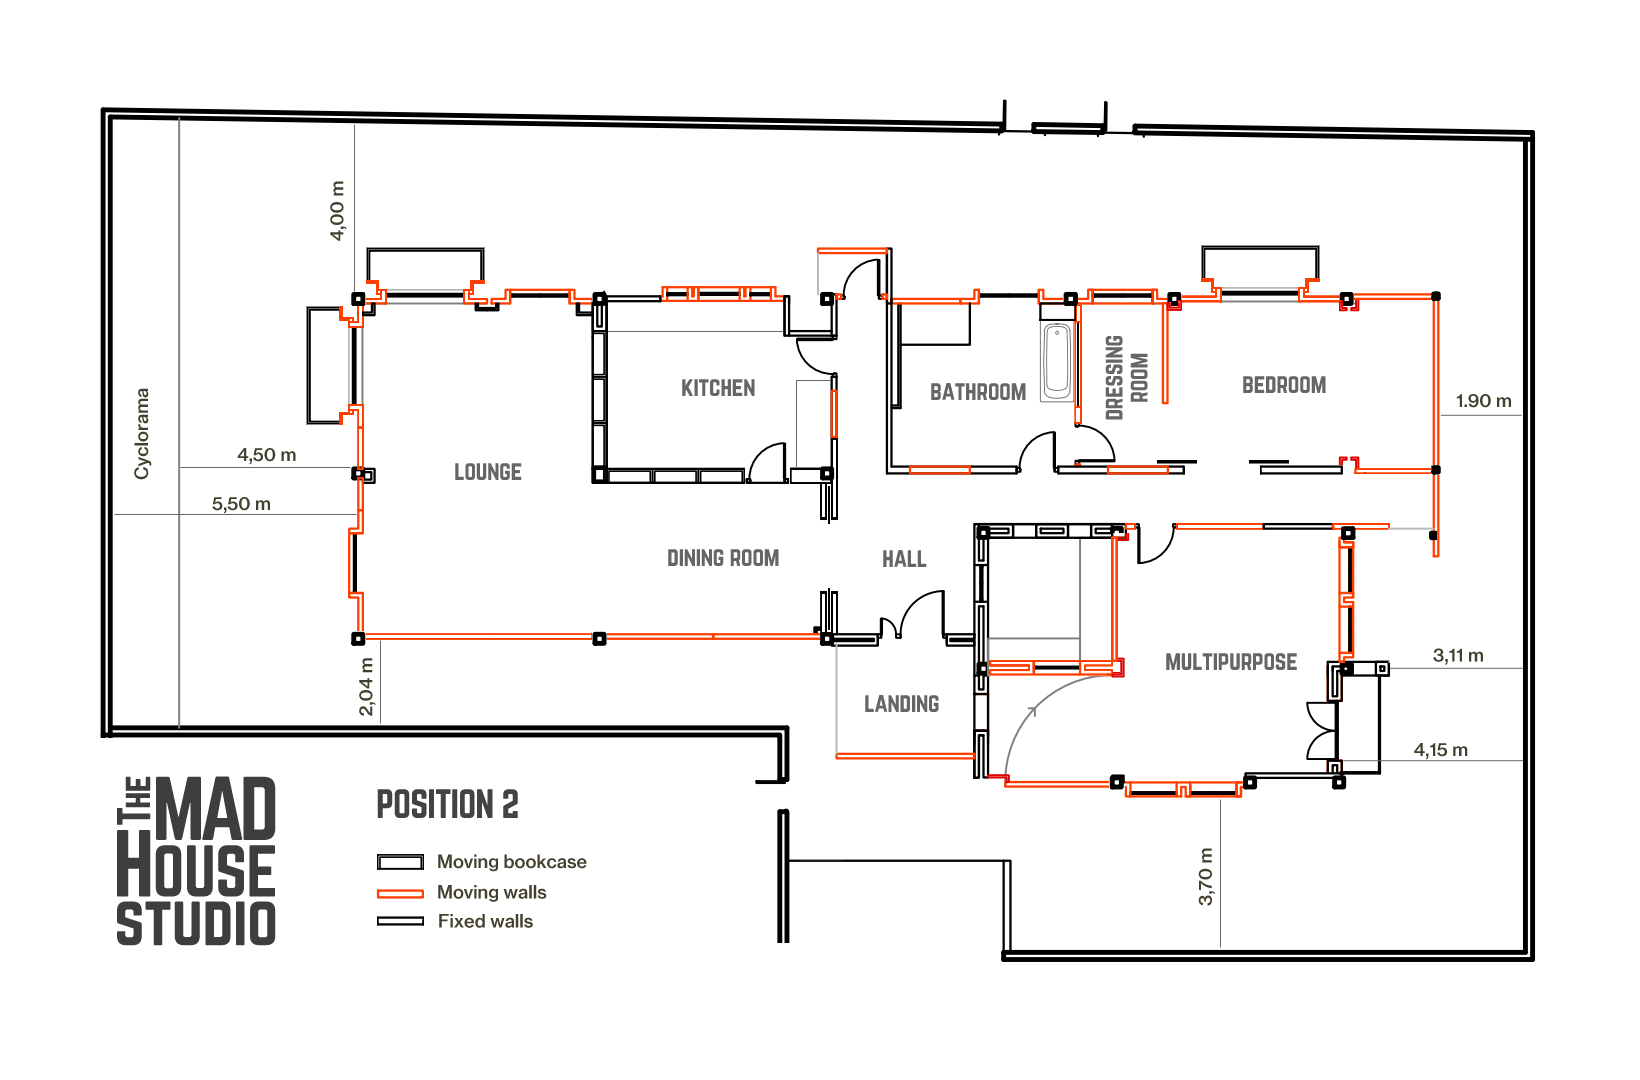 Position 2 floor plan